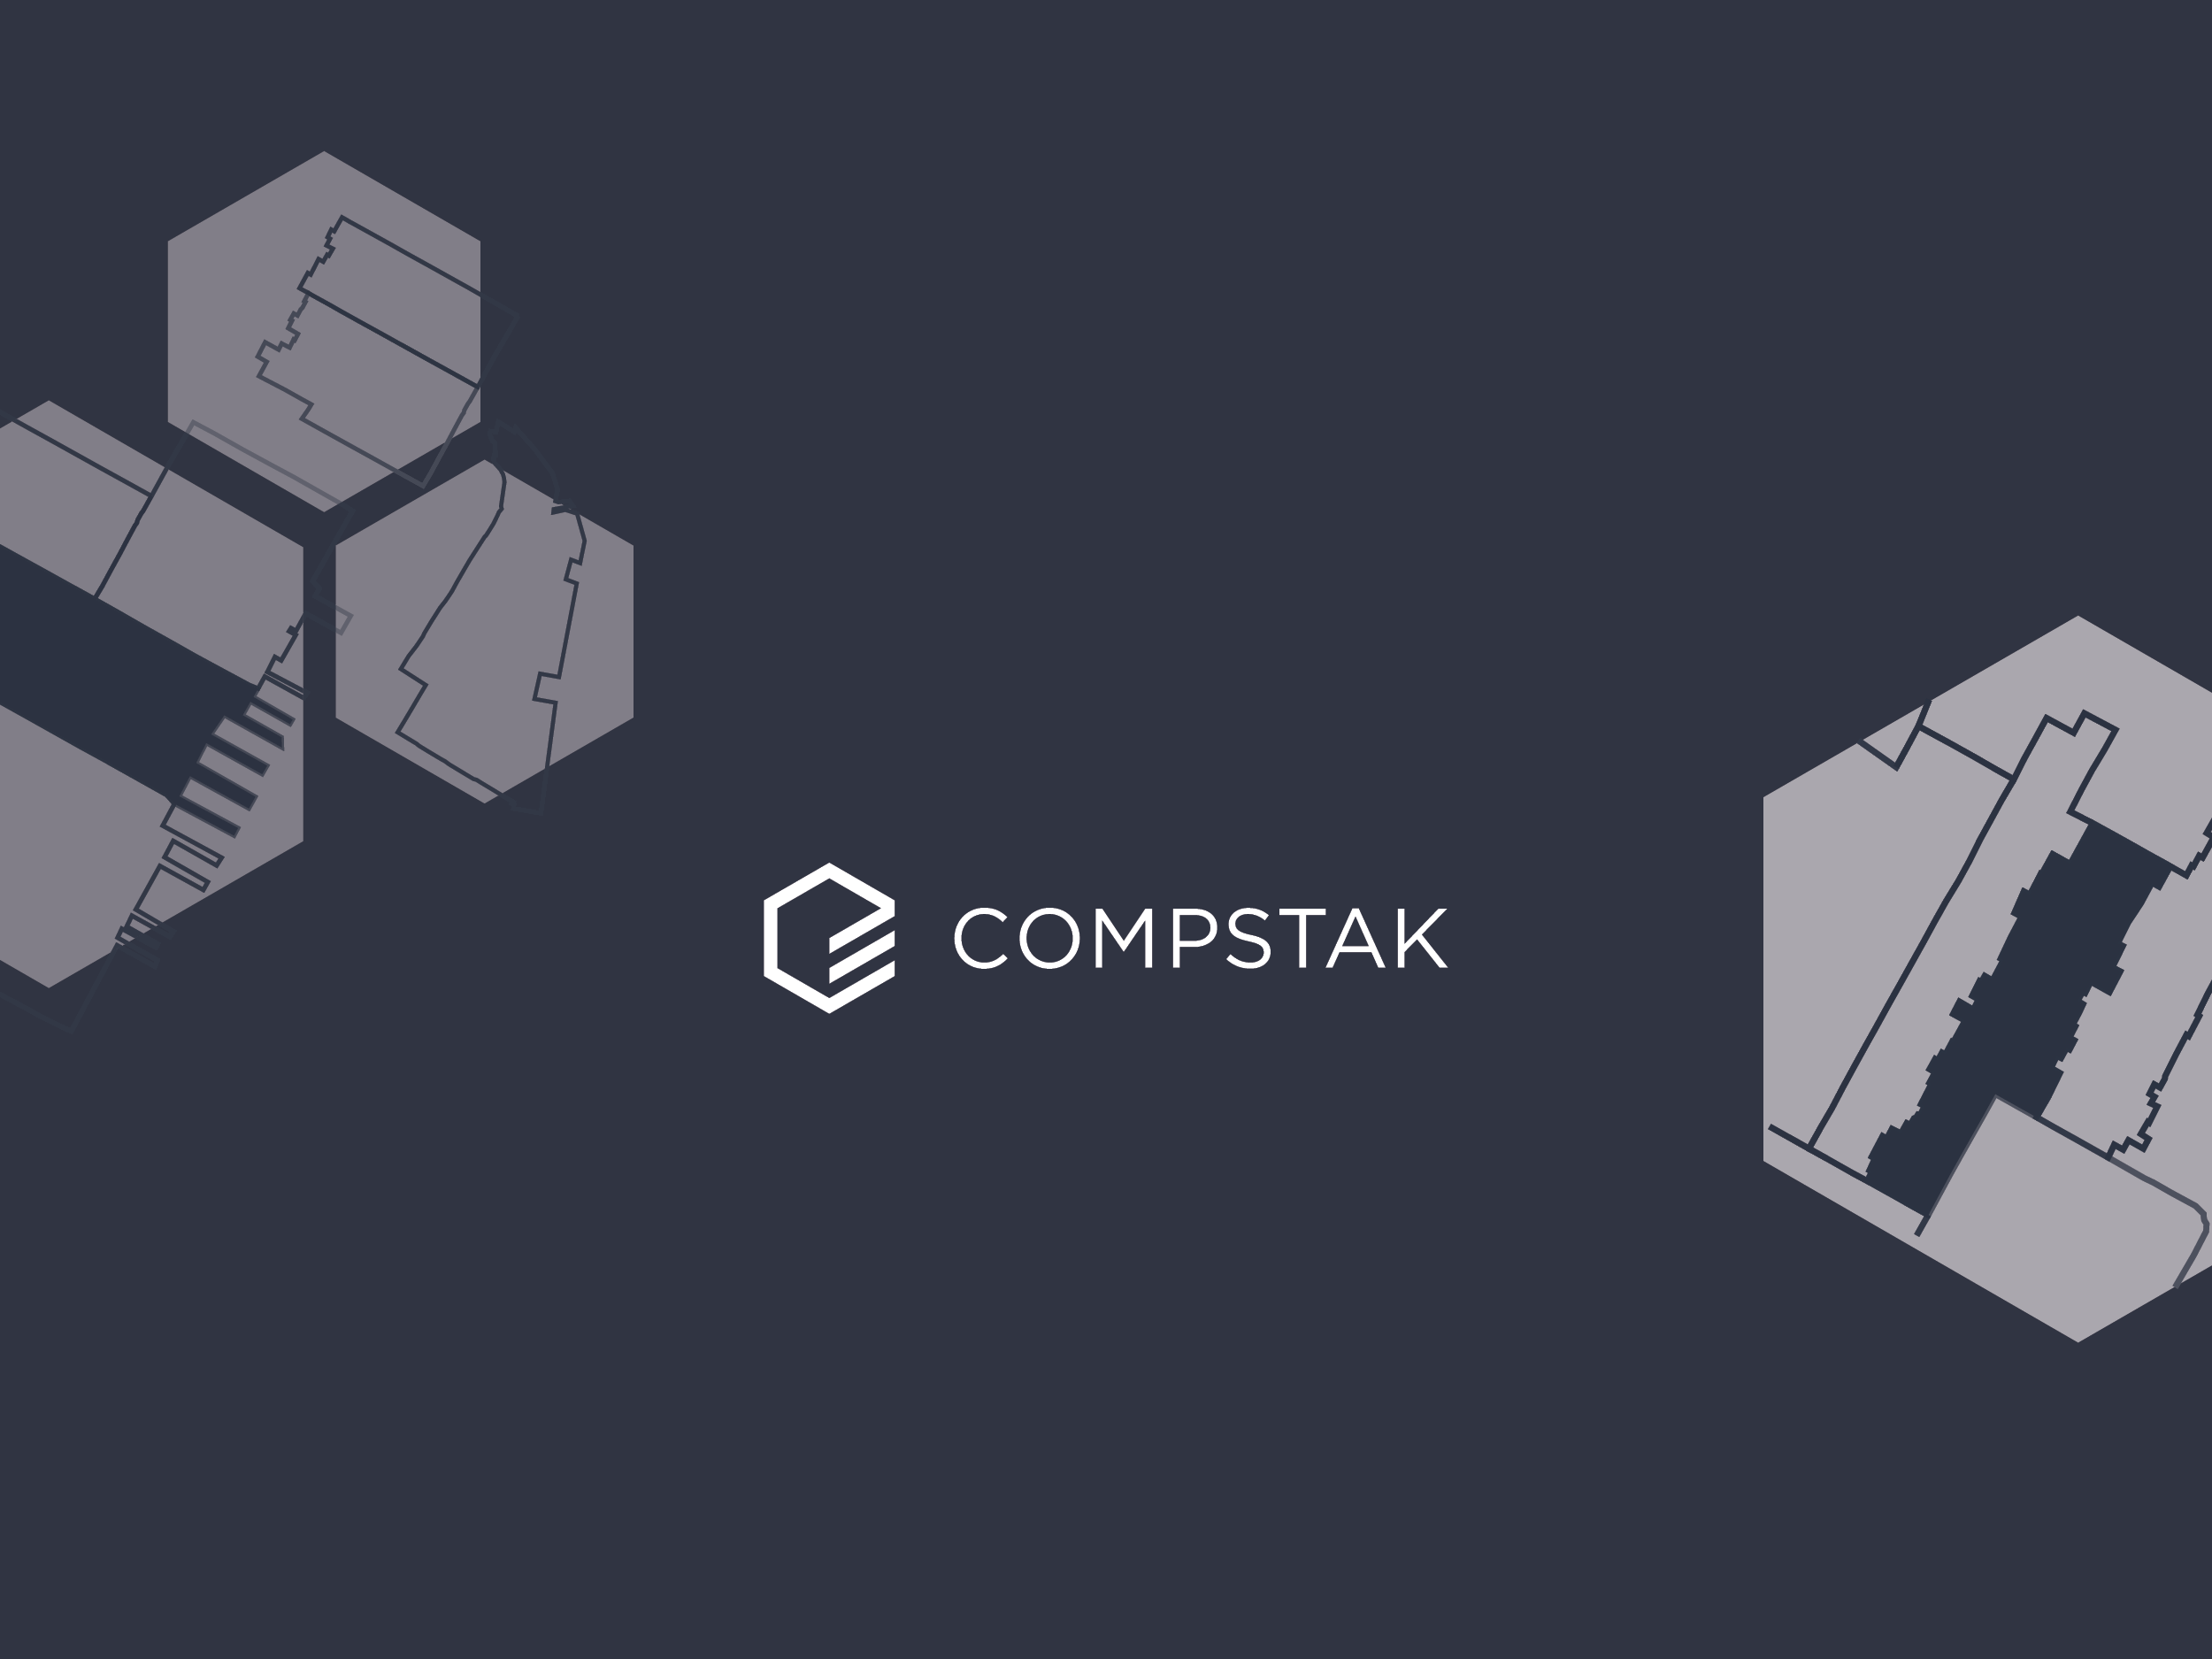 Compstack